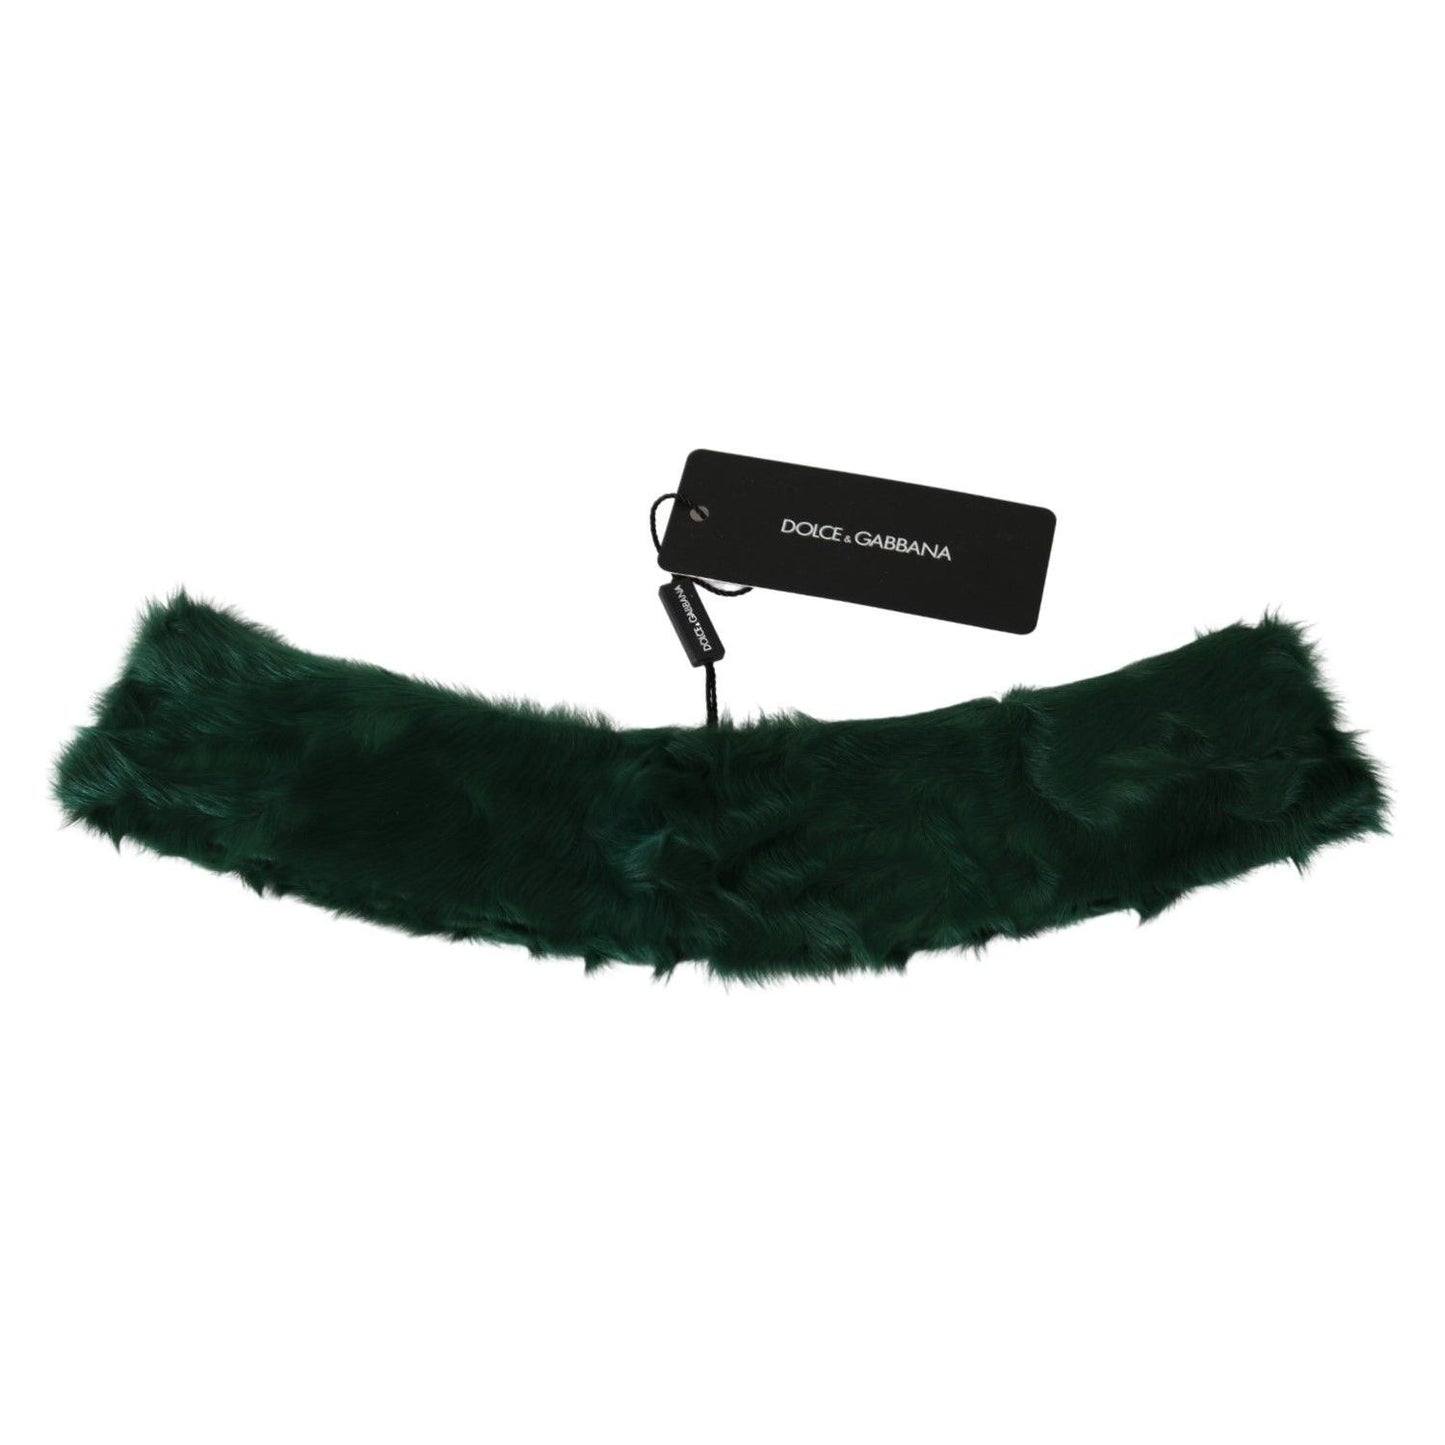 Dolce & Gabbana Luxurious Green Lambskin Scarf for Women green-fur-neck-collar-wrap-lambskin-scarf IMG_3516-79a9b956-25c.jpg